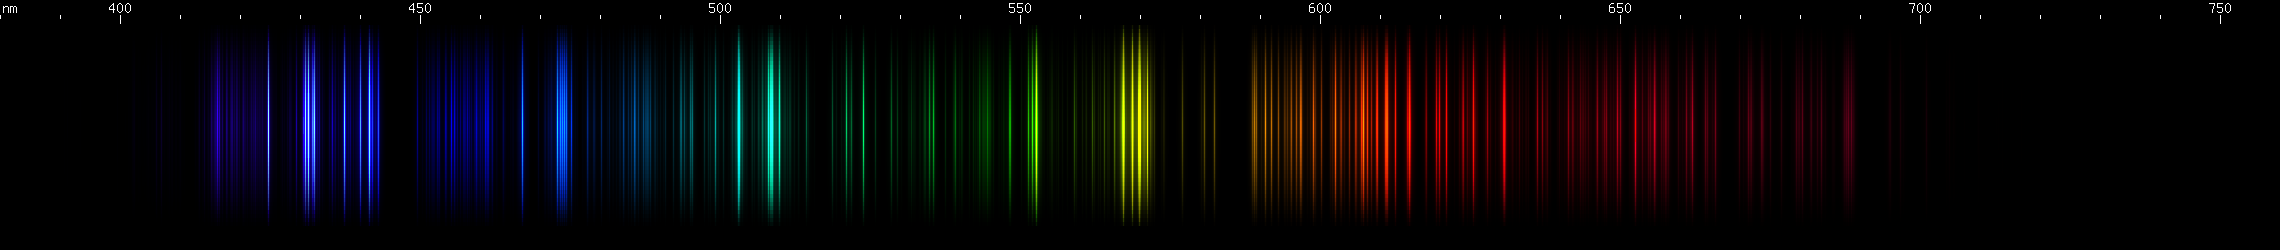 Spectral Lines of Scandium